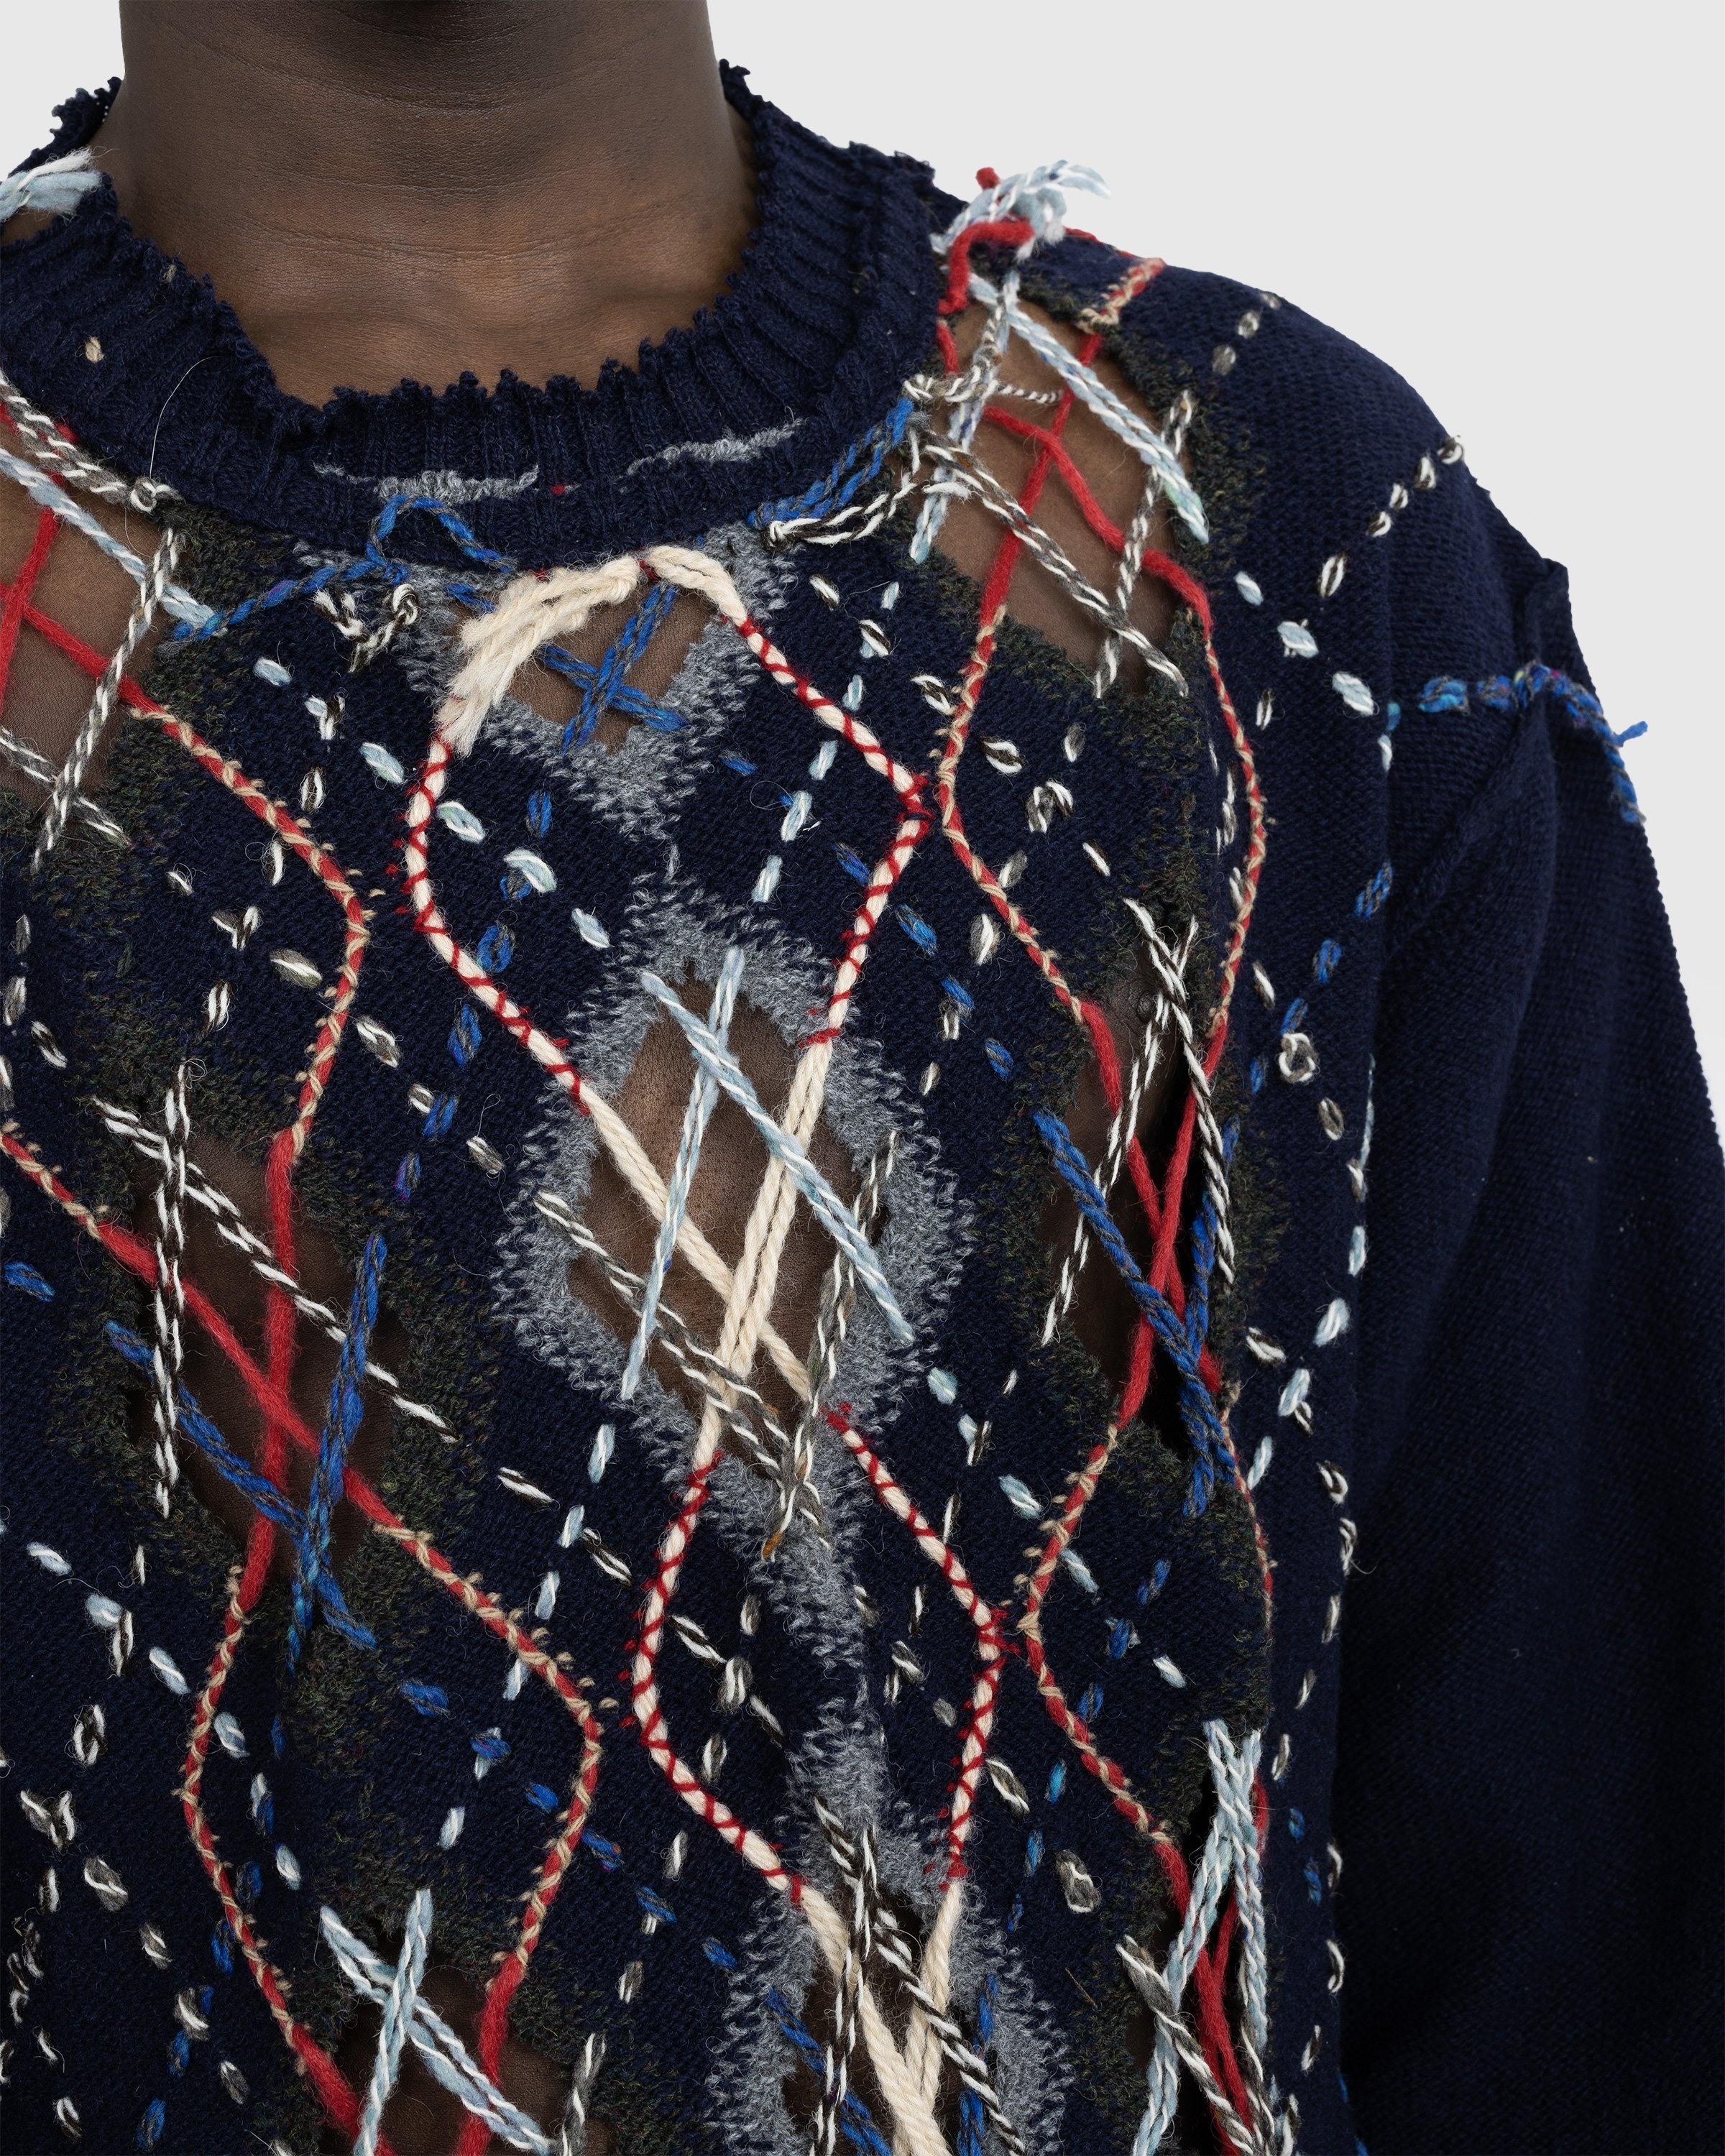 Maison Margiela – Distressed Wool Crewneck Sweater Multi - Sweats - Multi - Image 4